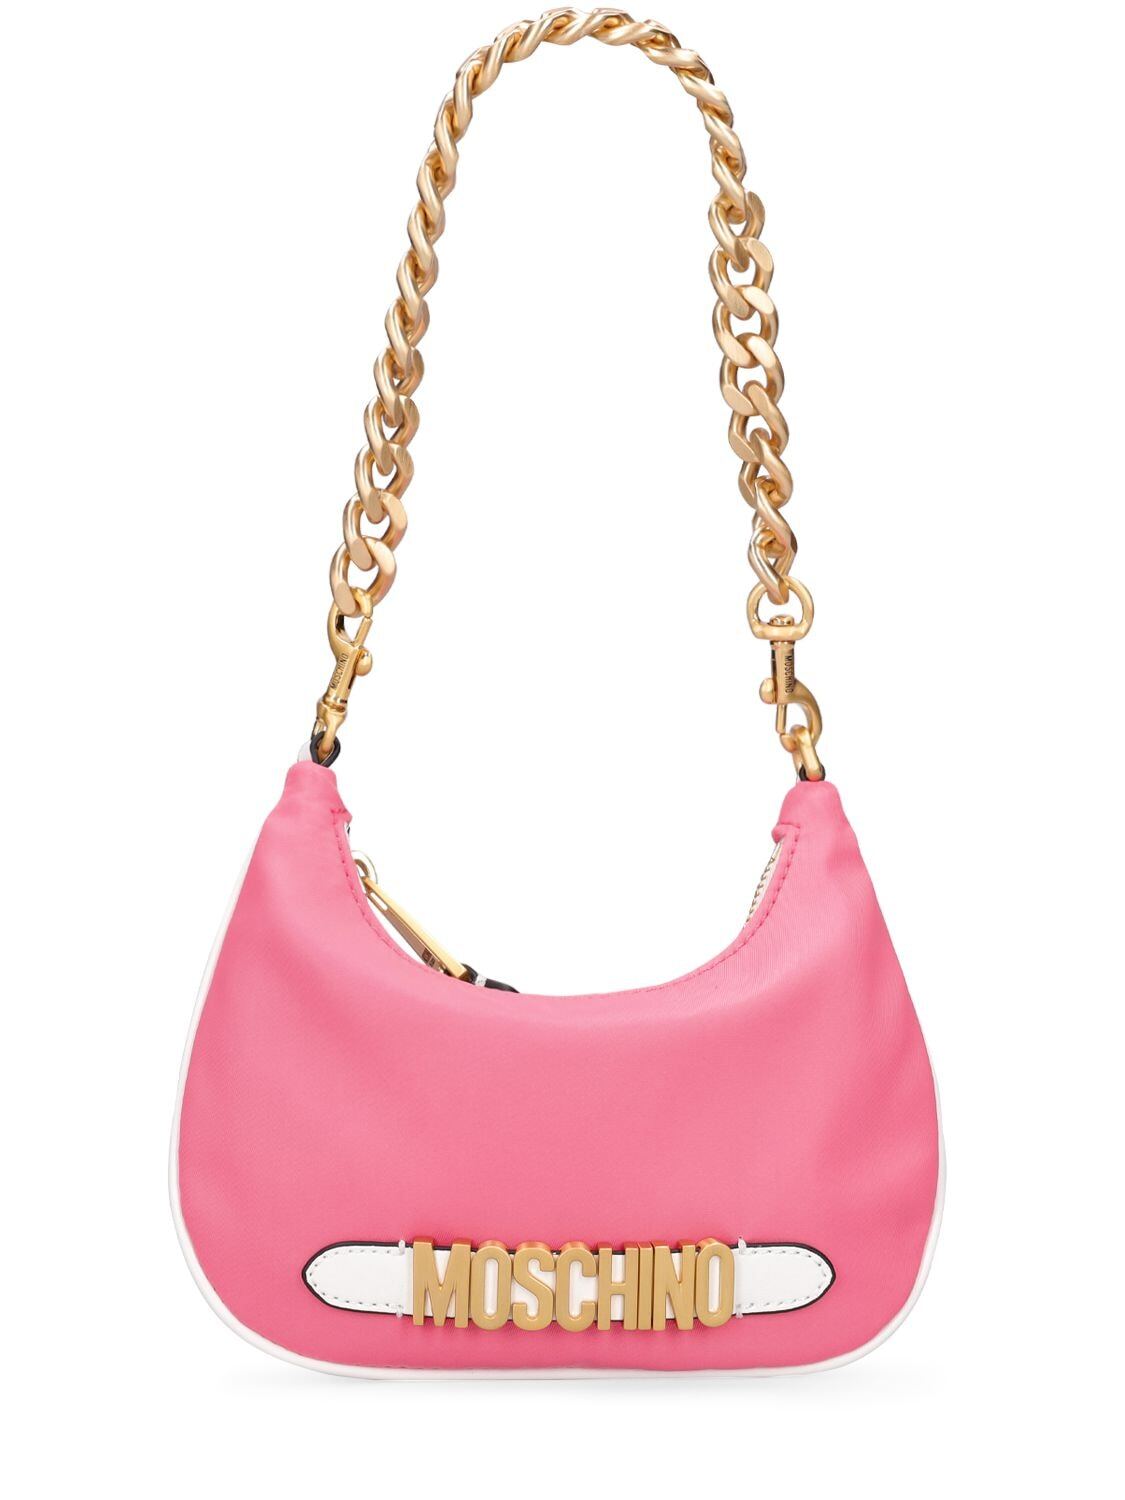 MOSCHINO Logo Nylon Top Handle Bag in pink